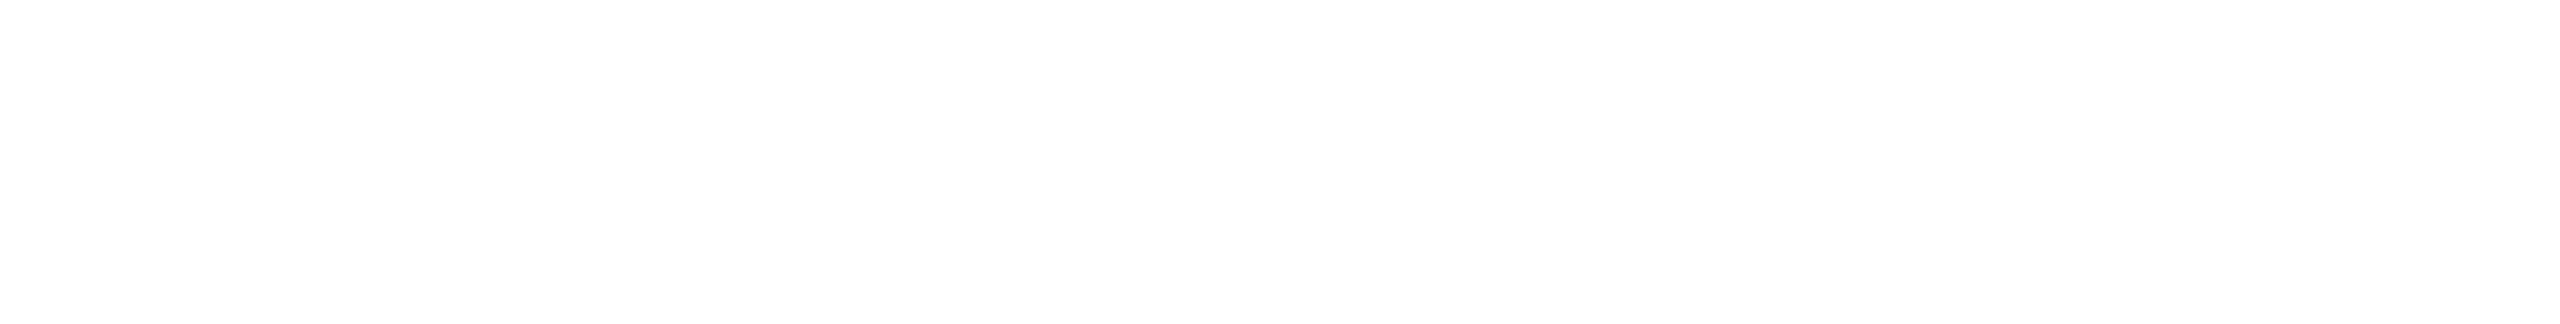 hypebeast logo